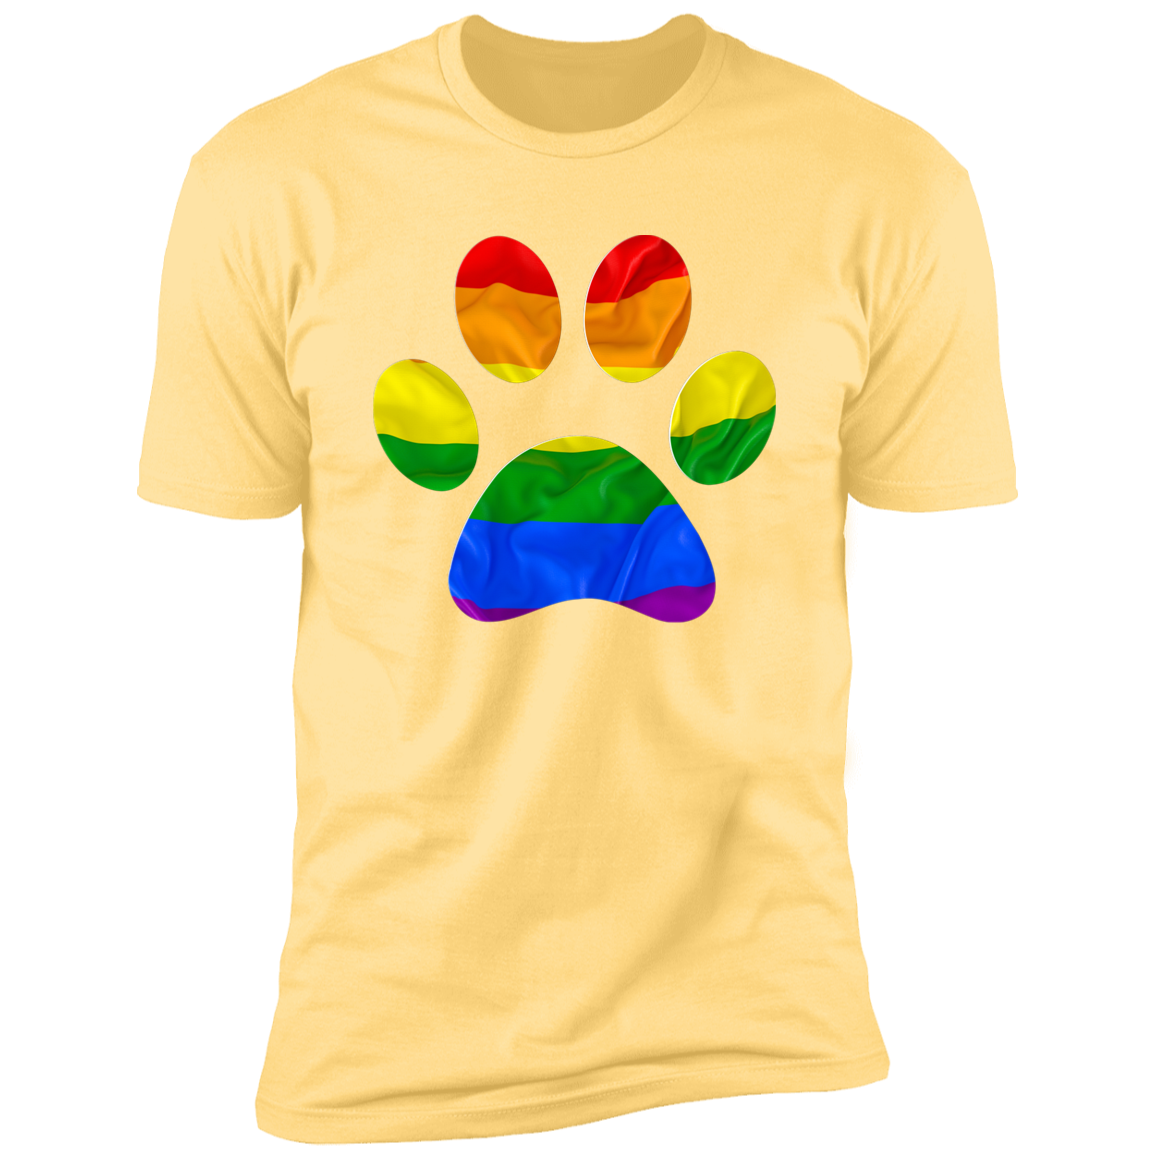 Pride Paw Pride T-shirt, Paw Pride Dog Shirt for humans, in banana cream